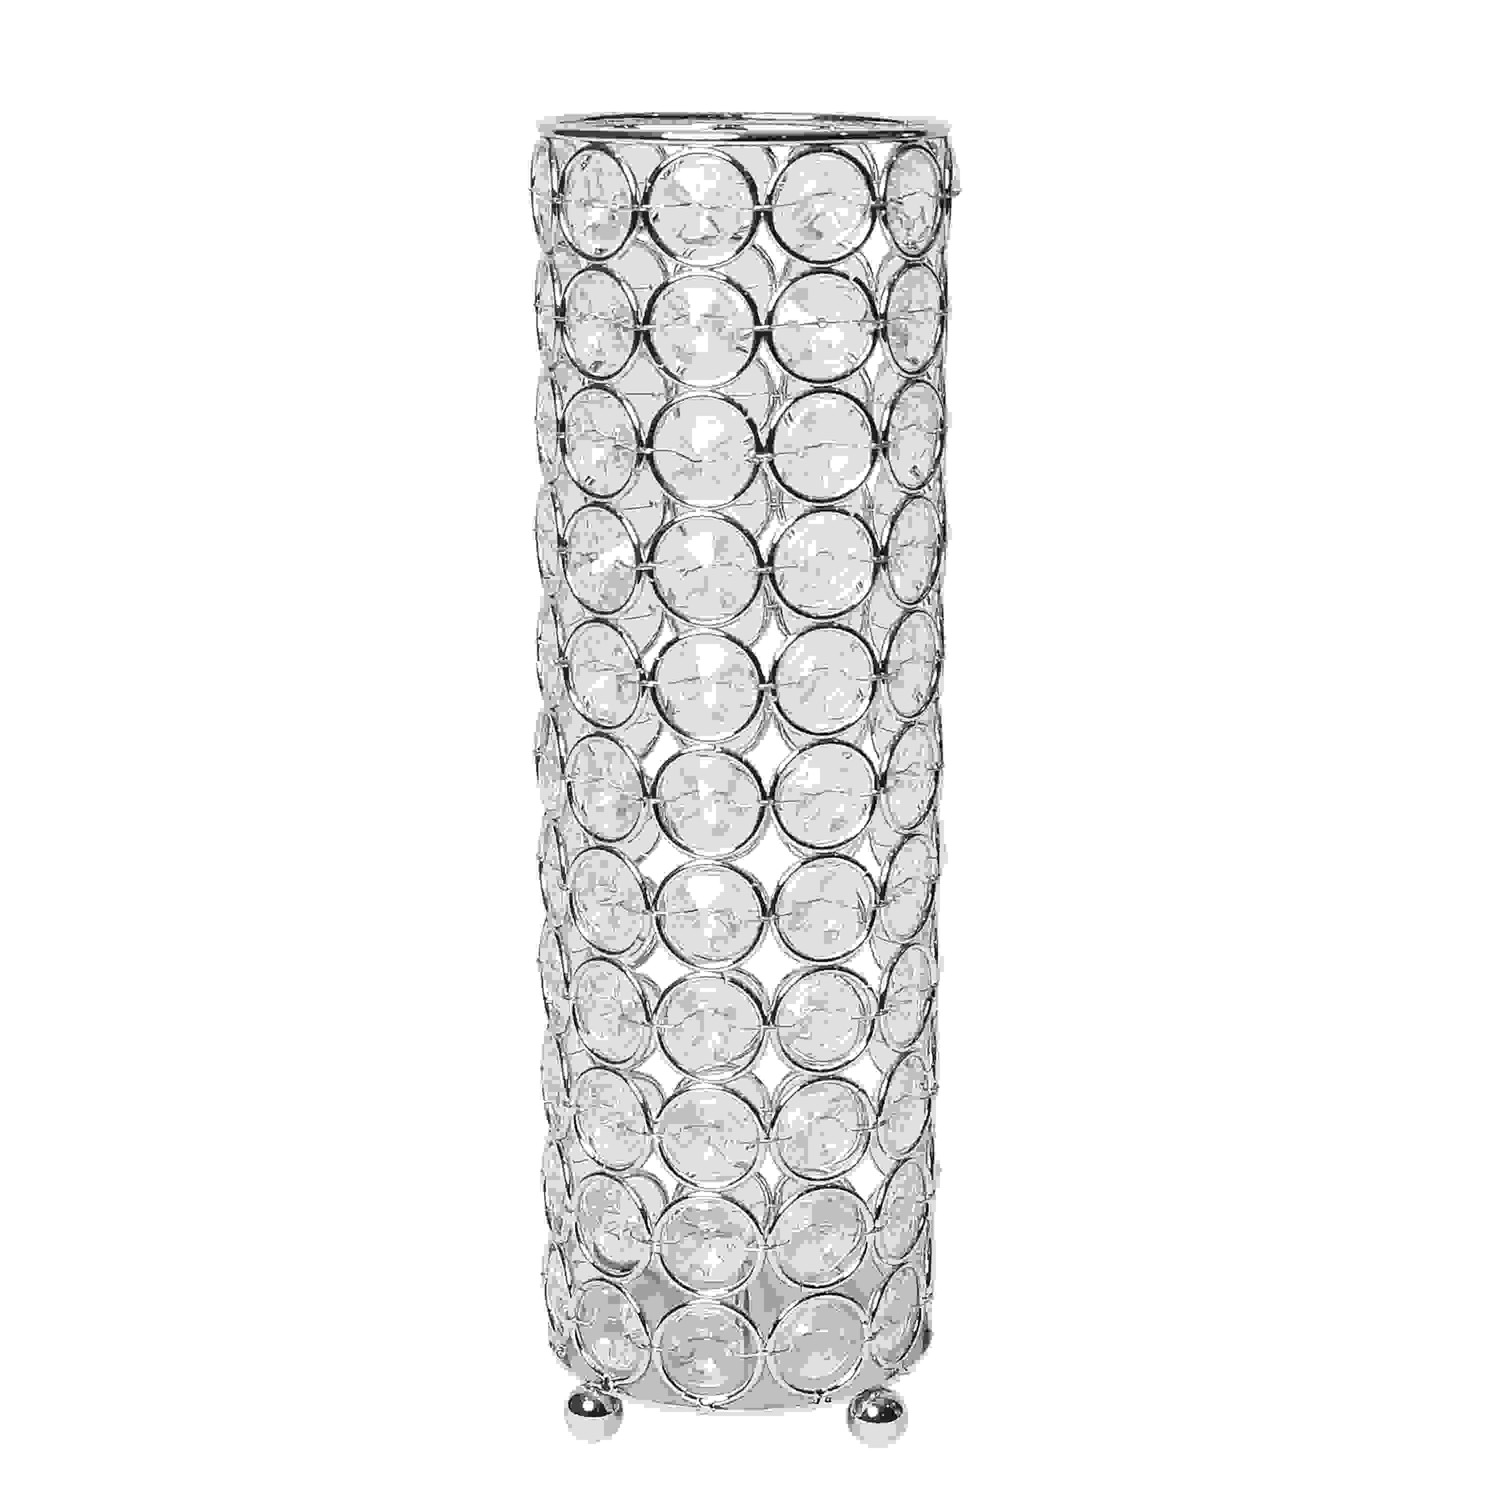 Elegant Designs Elipse Crystal Decorative Flower Vase, Candle Holder, Wedding Centerpiece, 10.25 Inch, Chrome